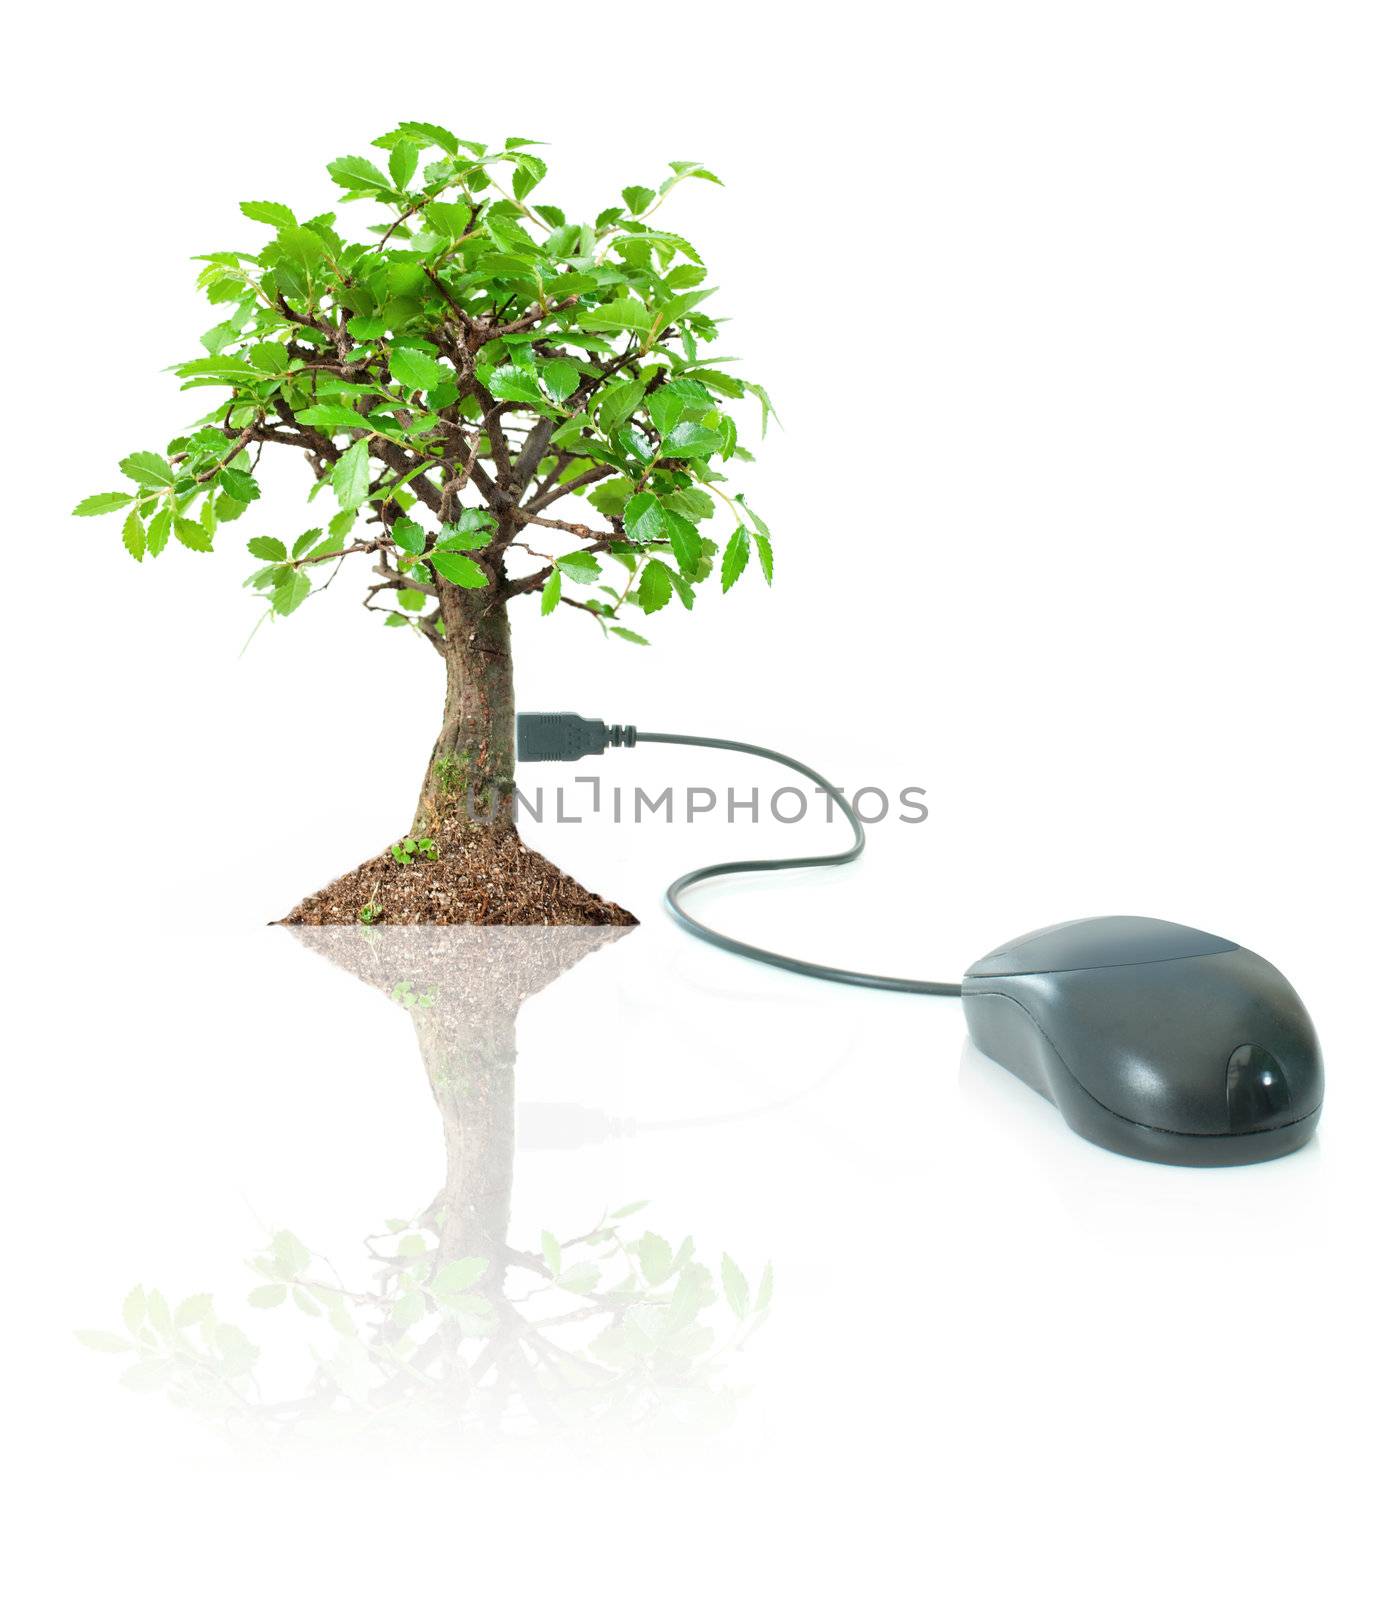 Eco friendly technology by unikpix